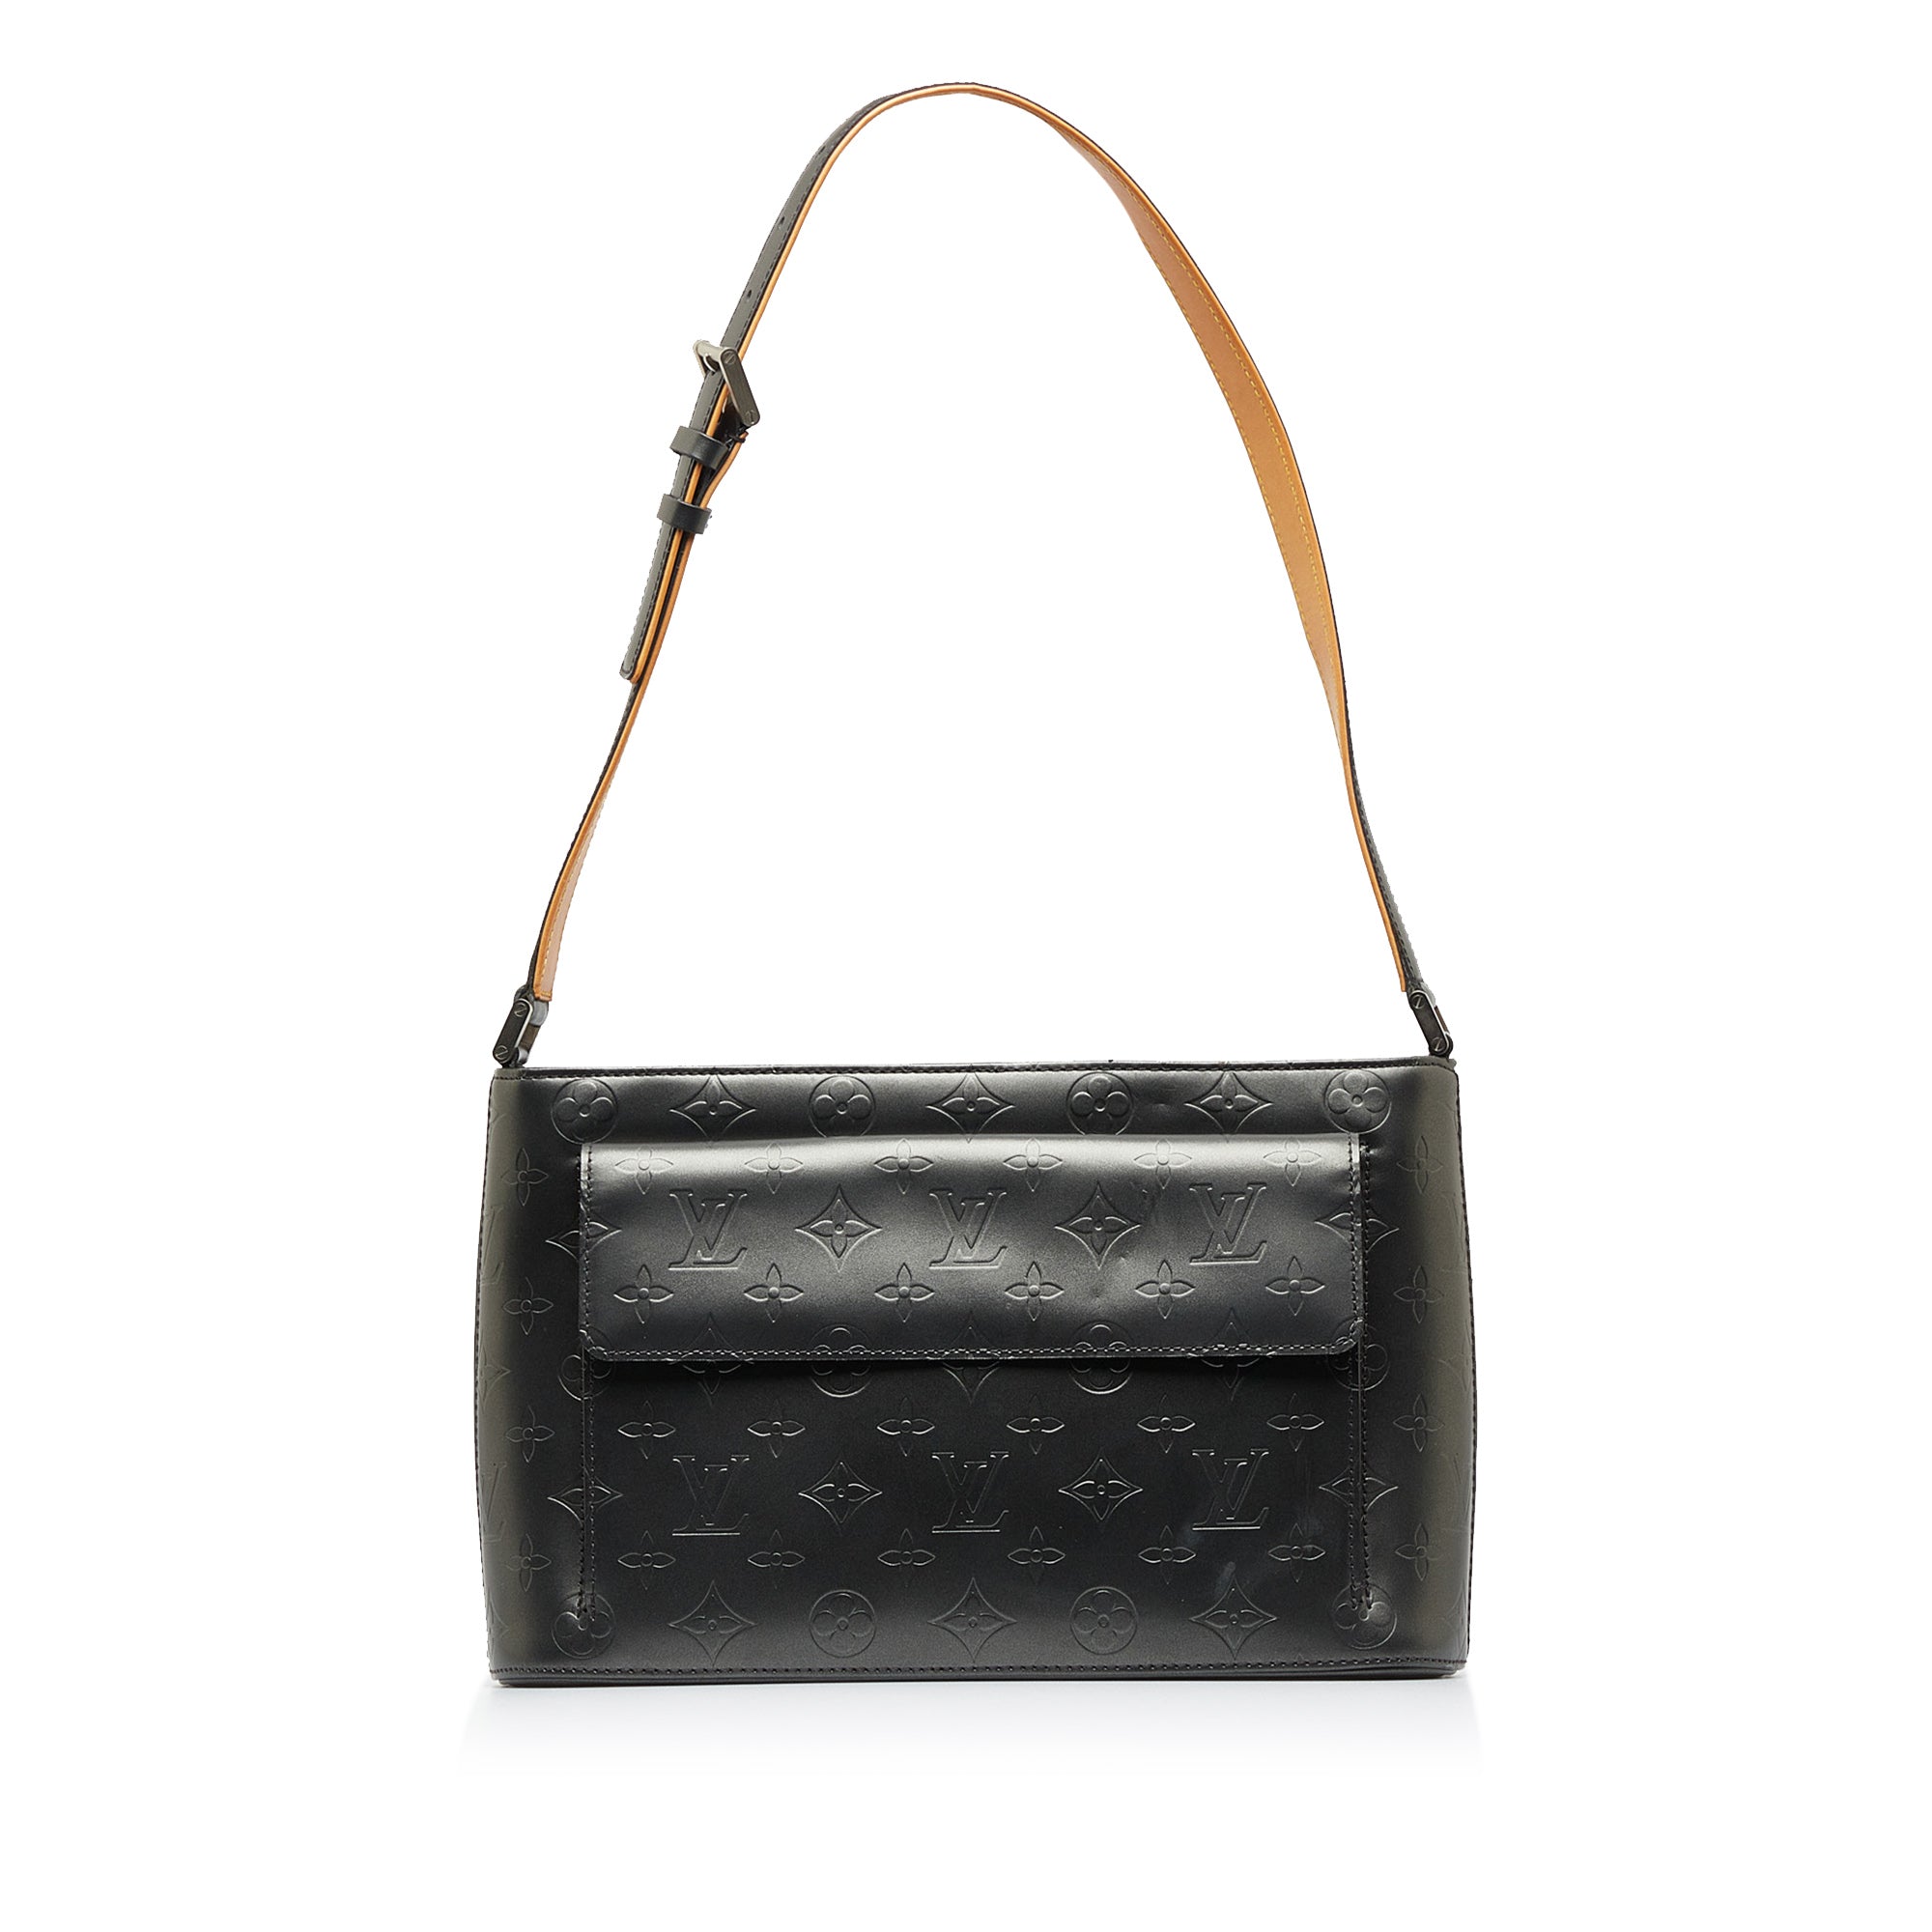 Louis Vuitton - Authenticated Metis Handbag - Leather Black for Women, Good Condition